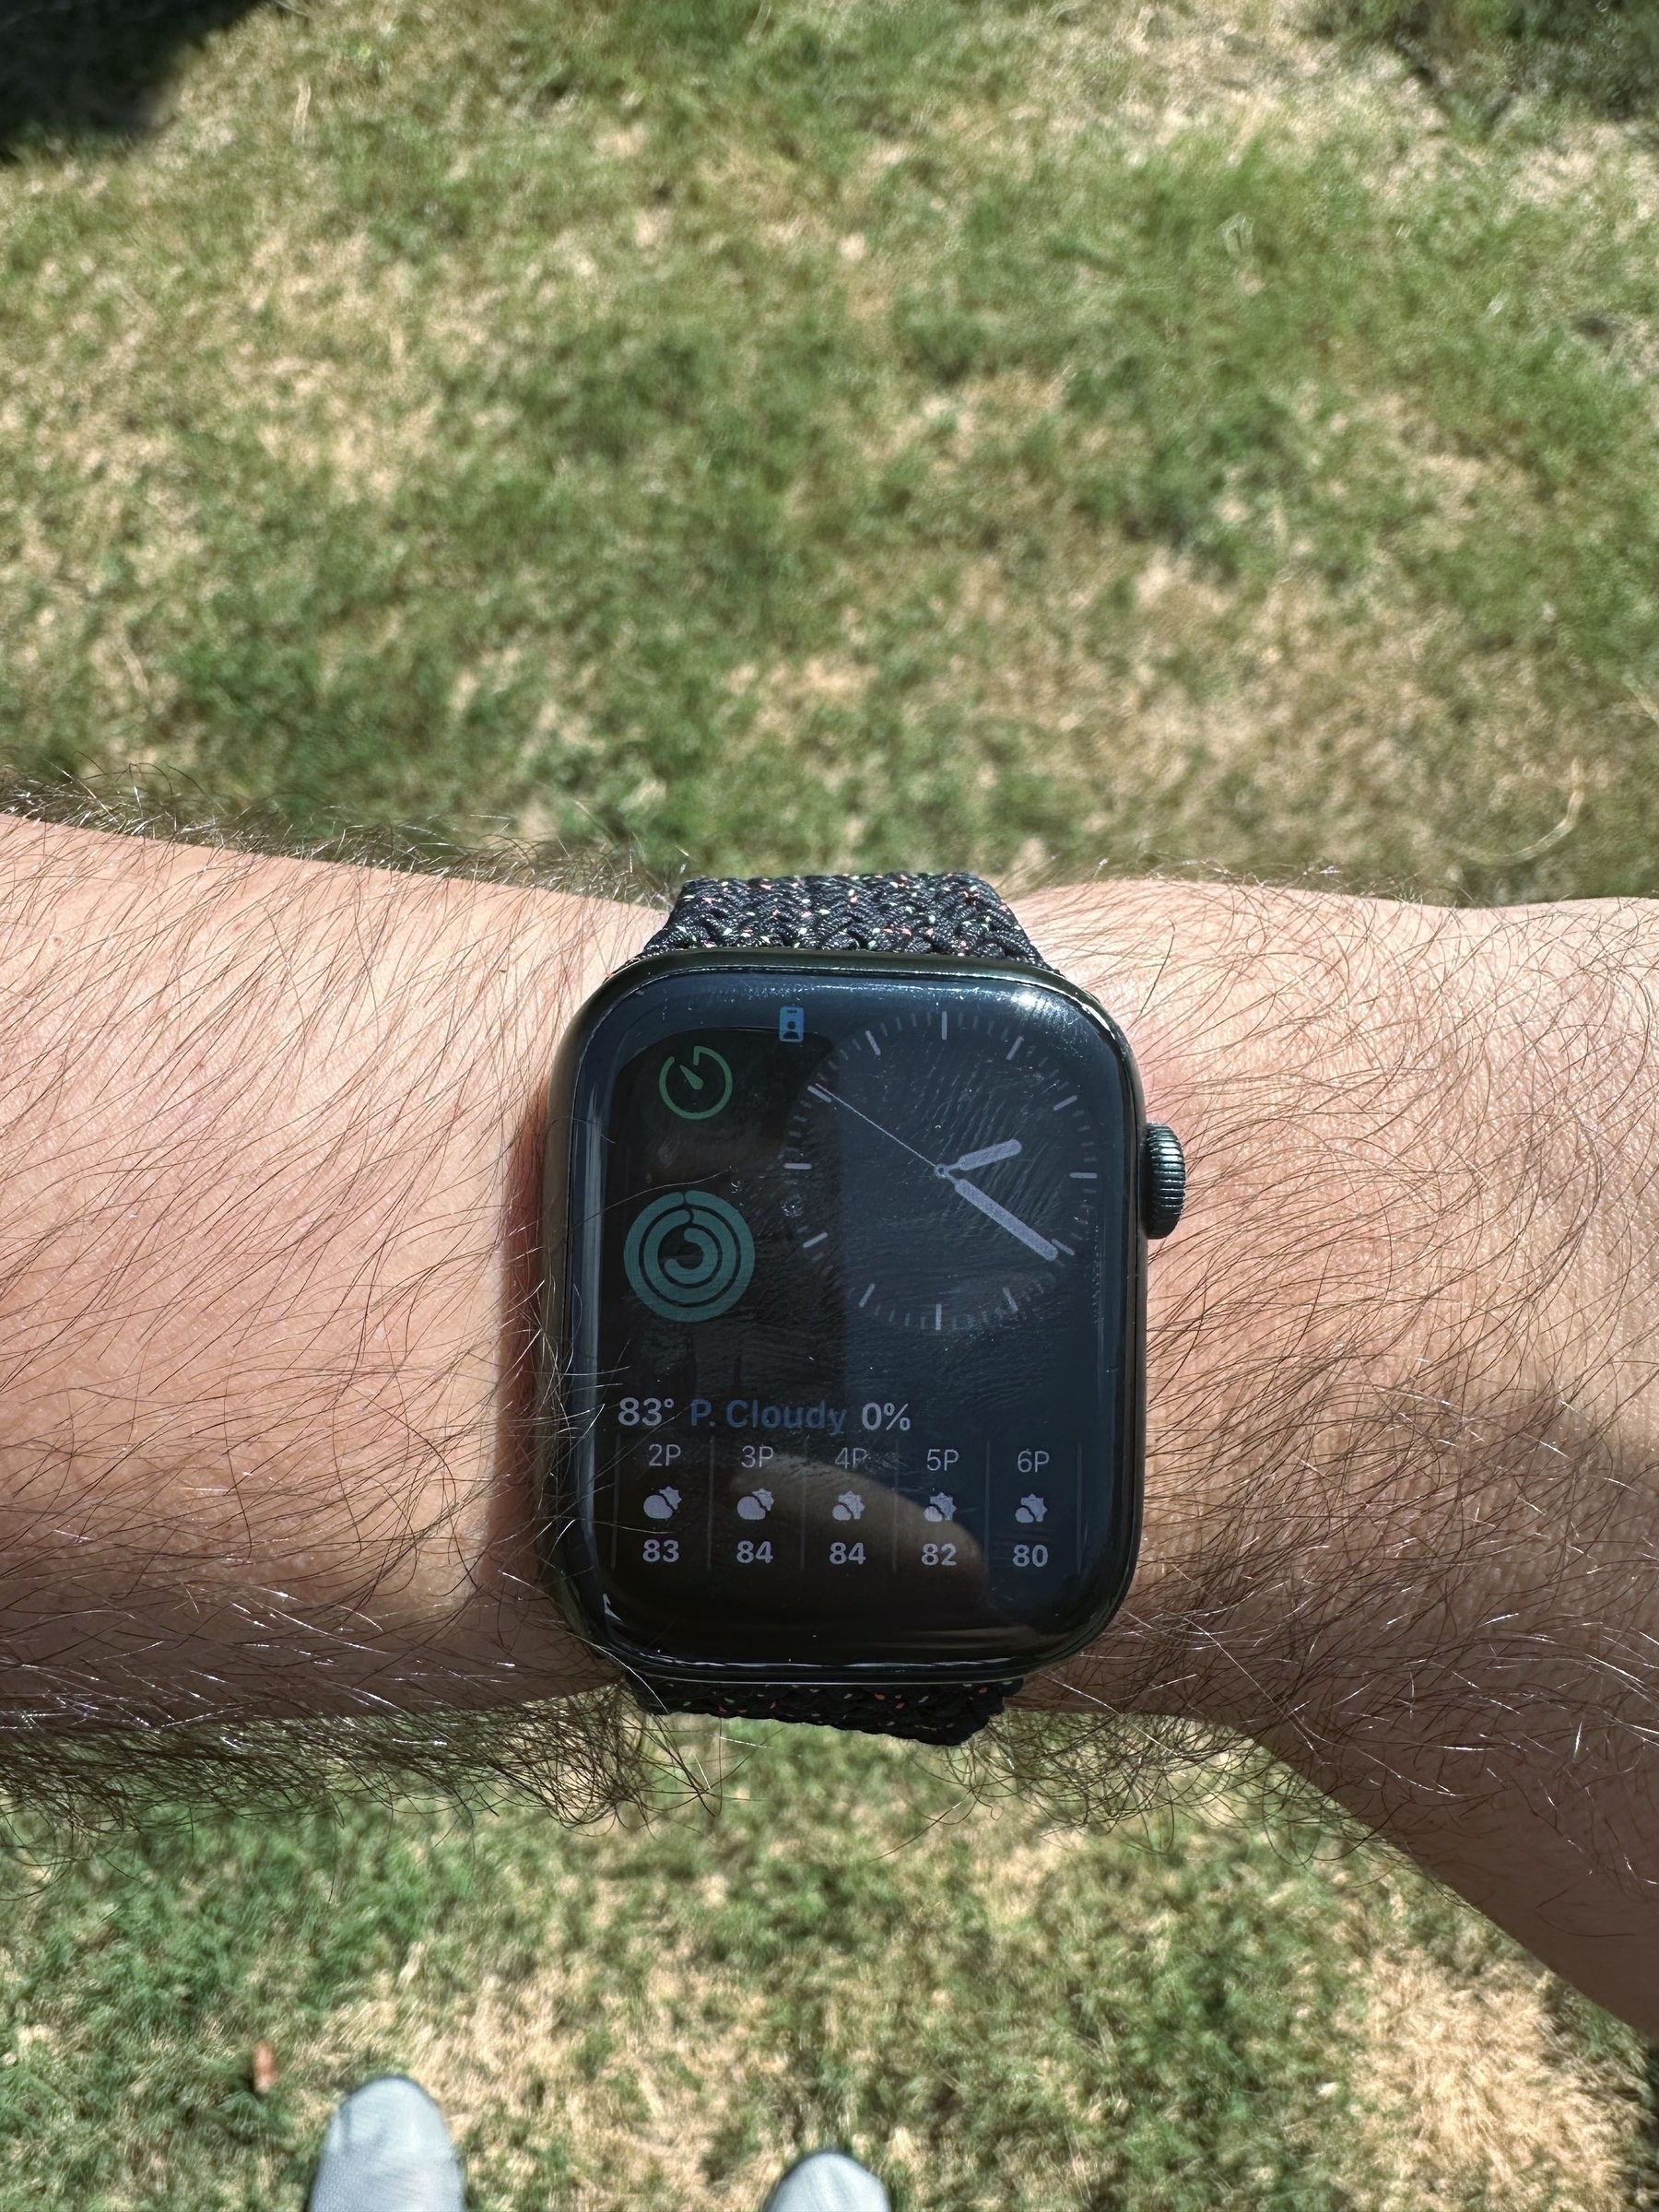 Apple Watch Series 7 on a Wrist